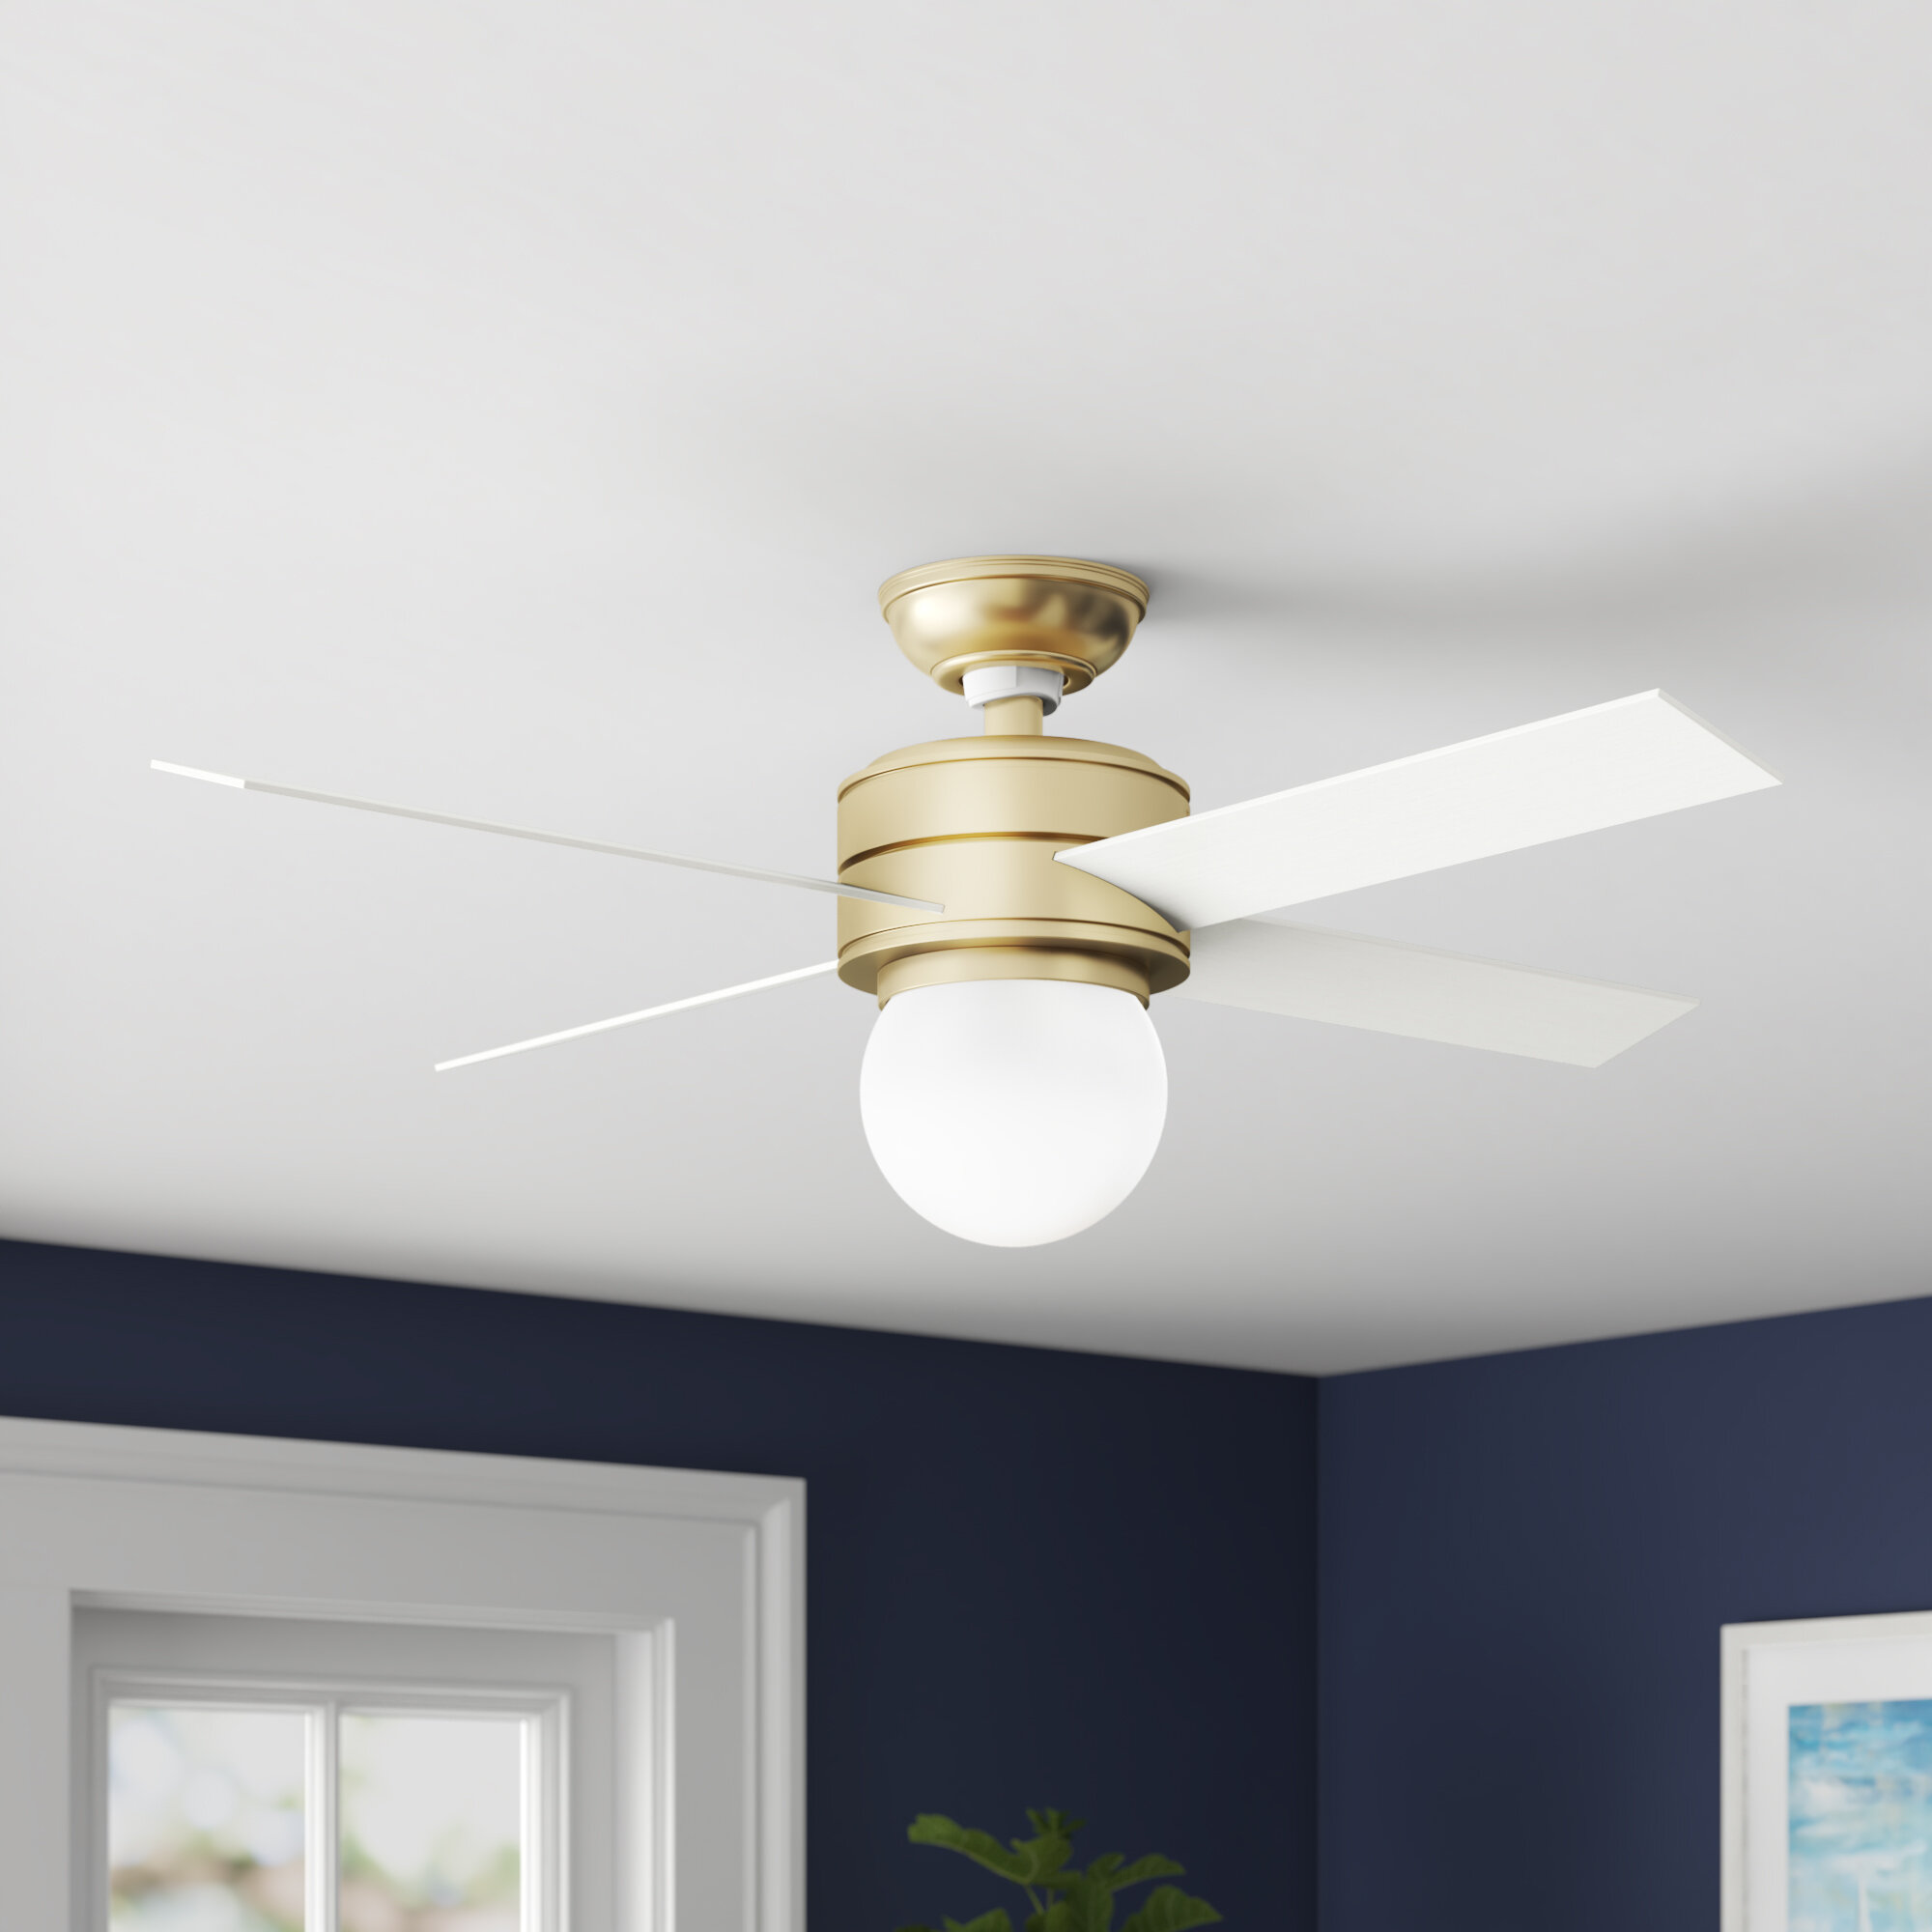 52" Wooden LED Cabin Ceiling Fan Remote Unique Brushed Gold Fixture Light Kit